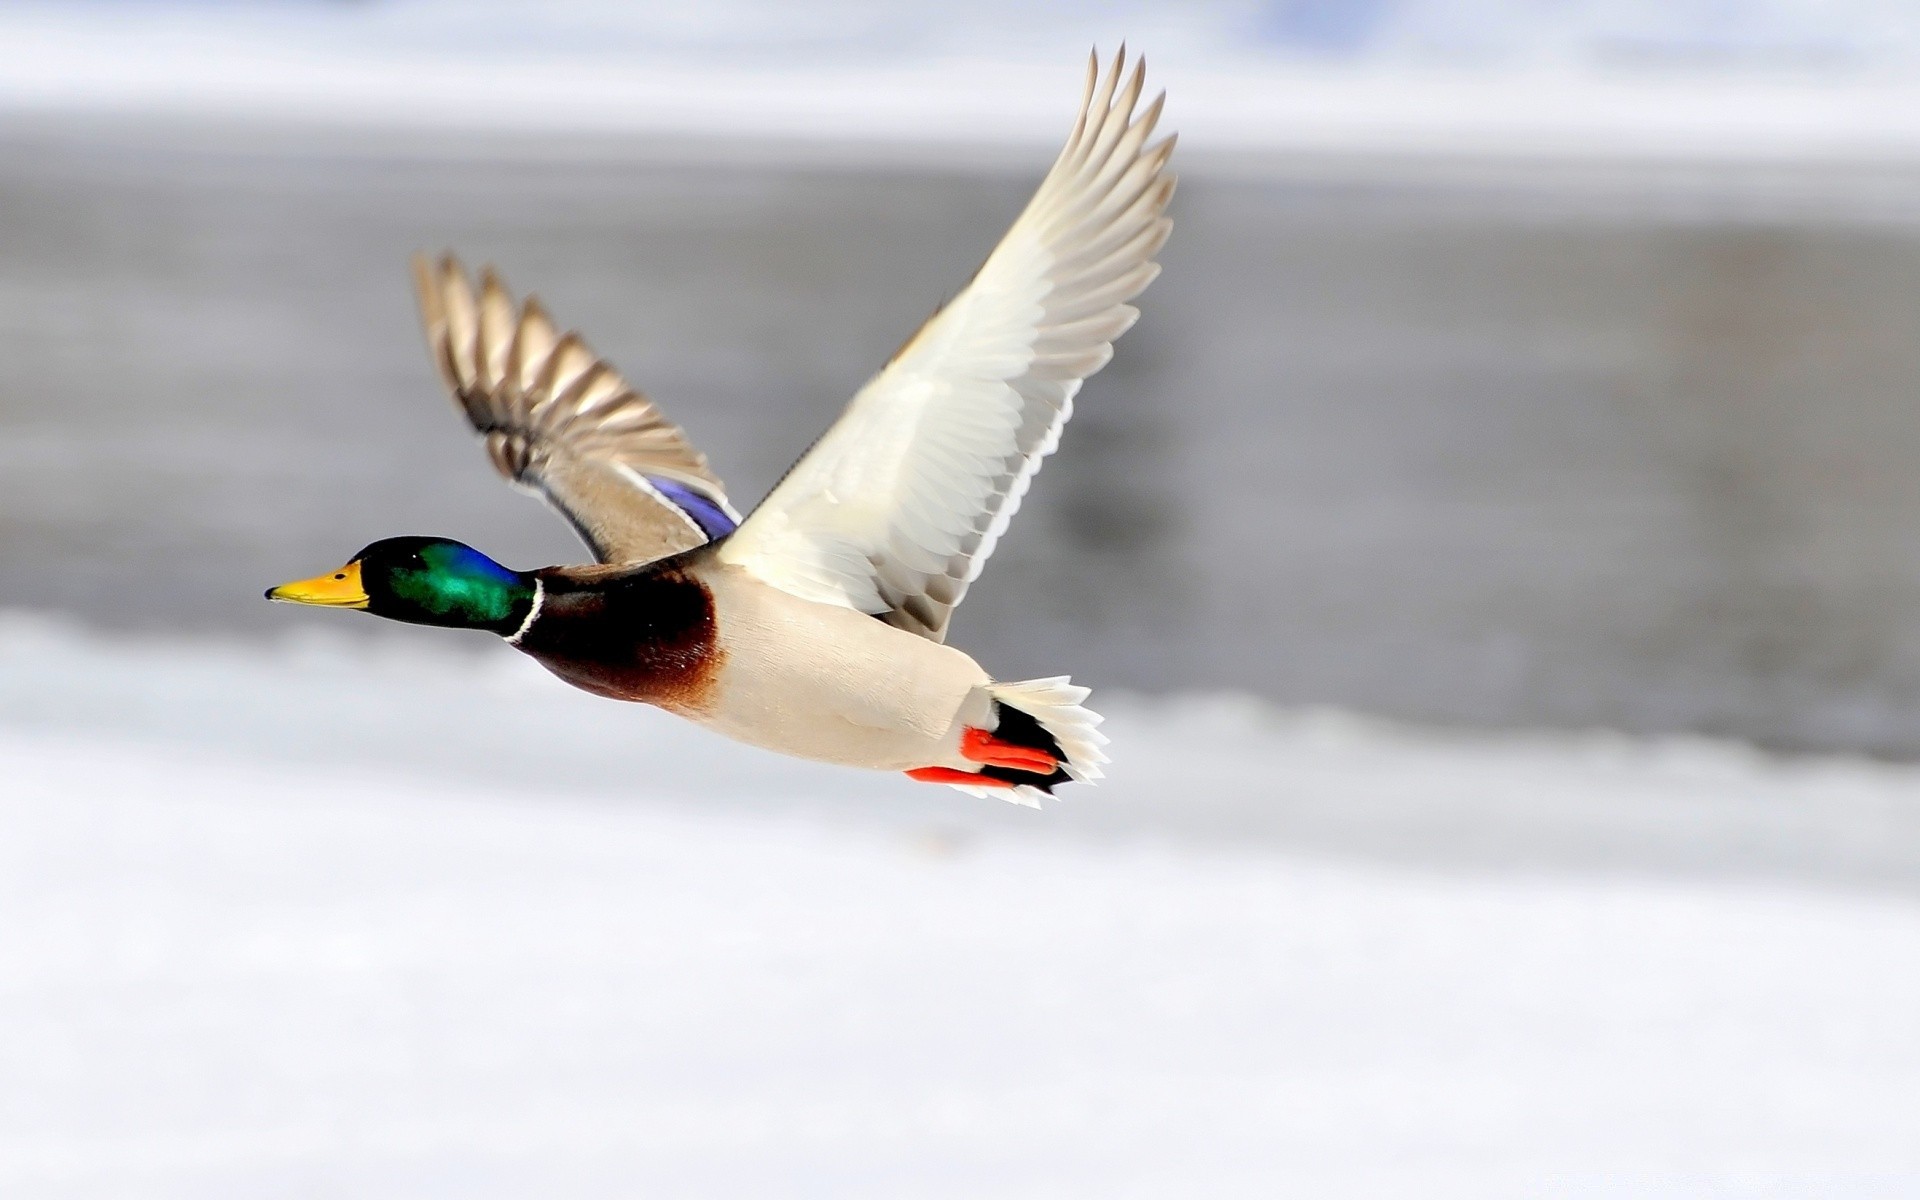 duck bird outdoors nature wildlife snow winter water flight